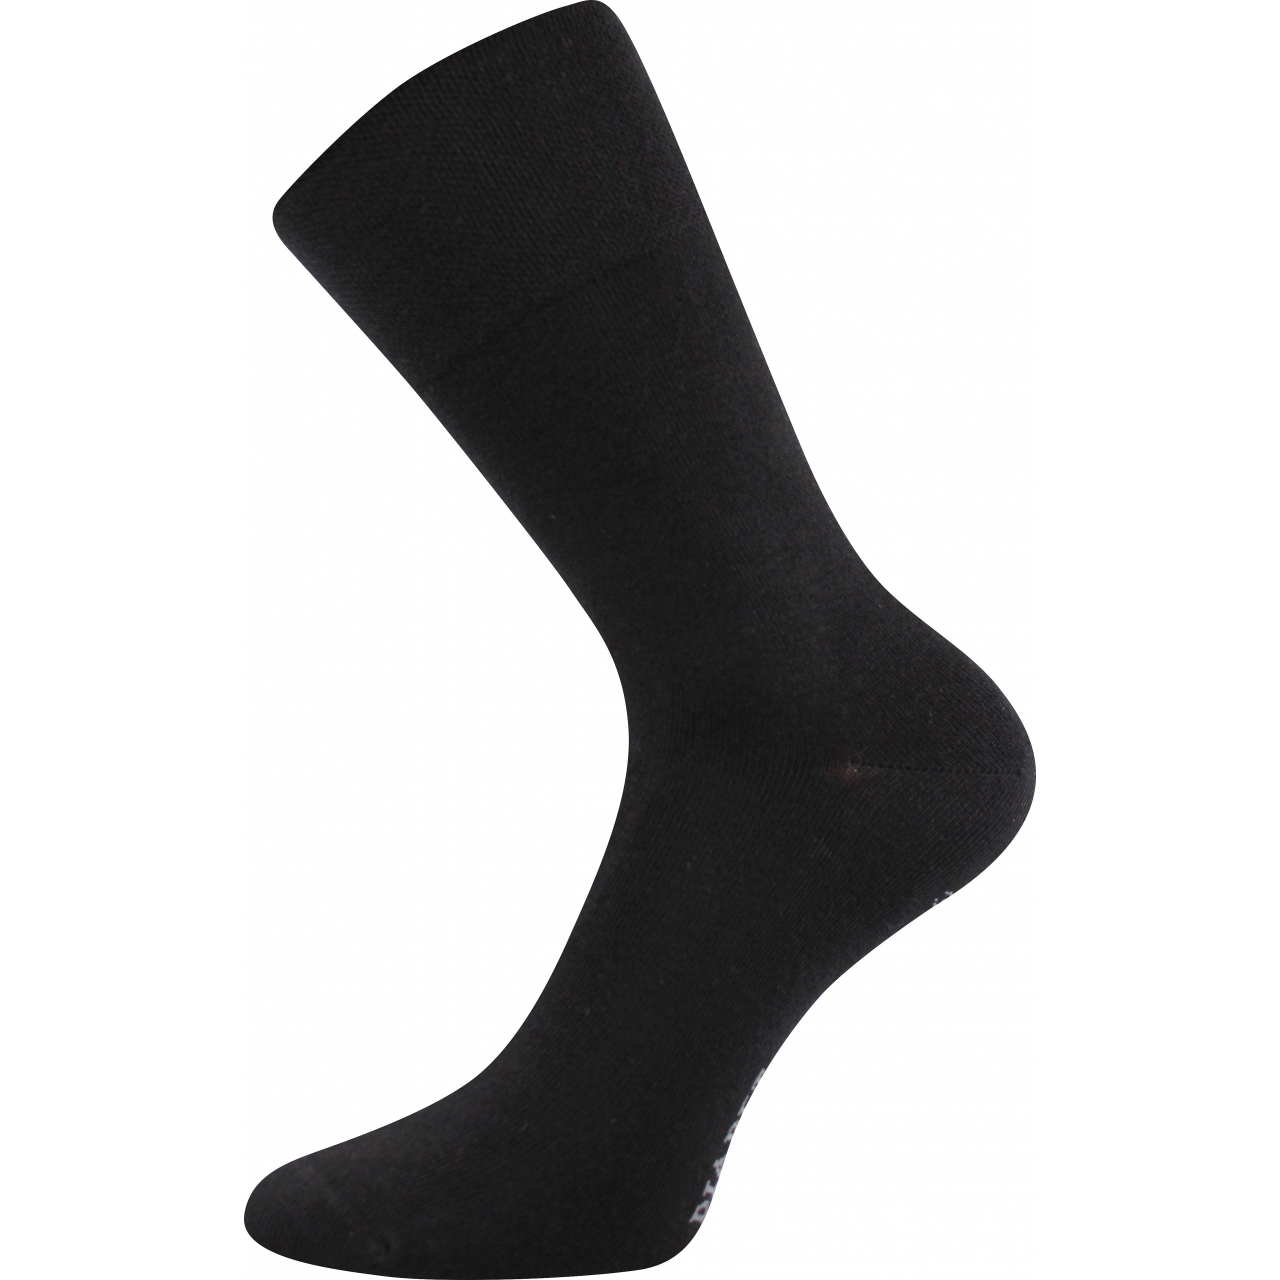 Ponožky klasické unisex Lonka Diagram - černé, 39-42